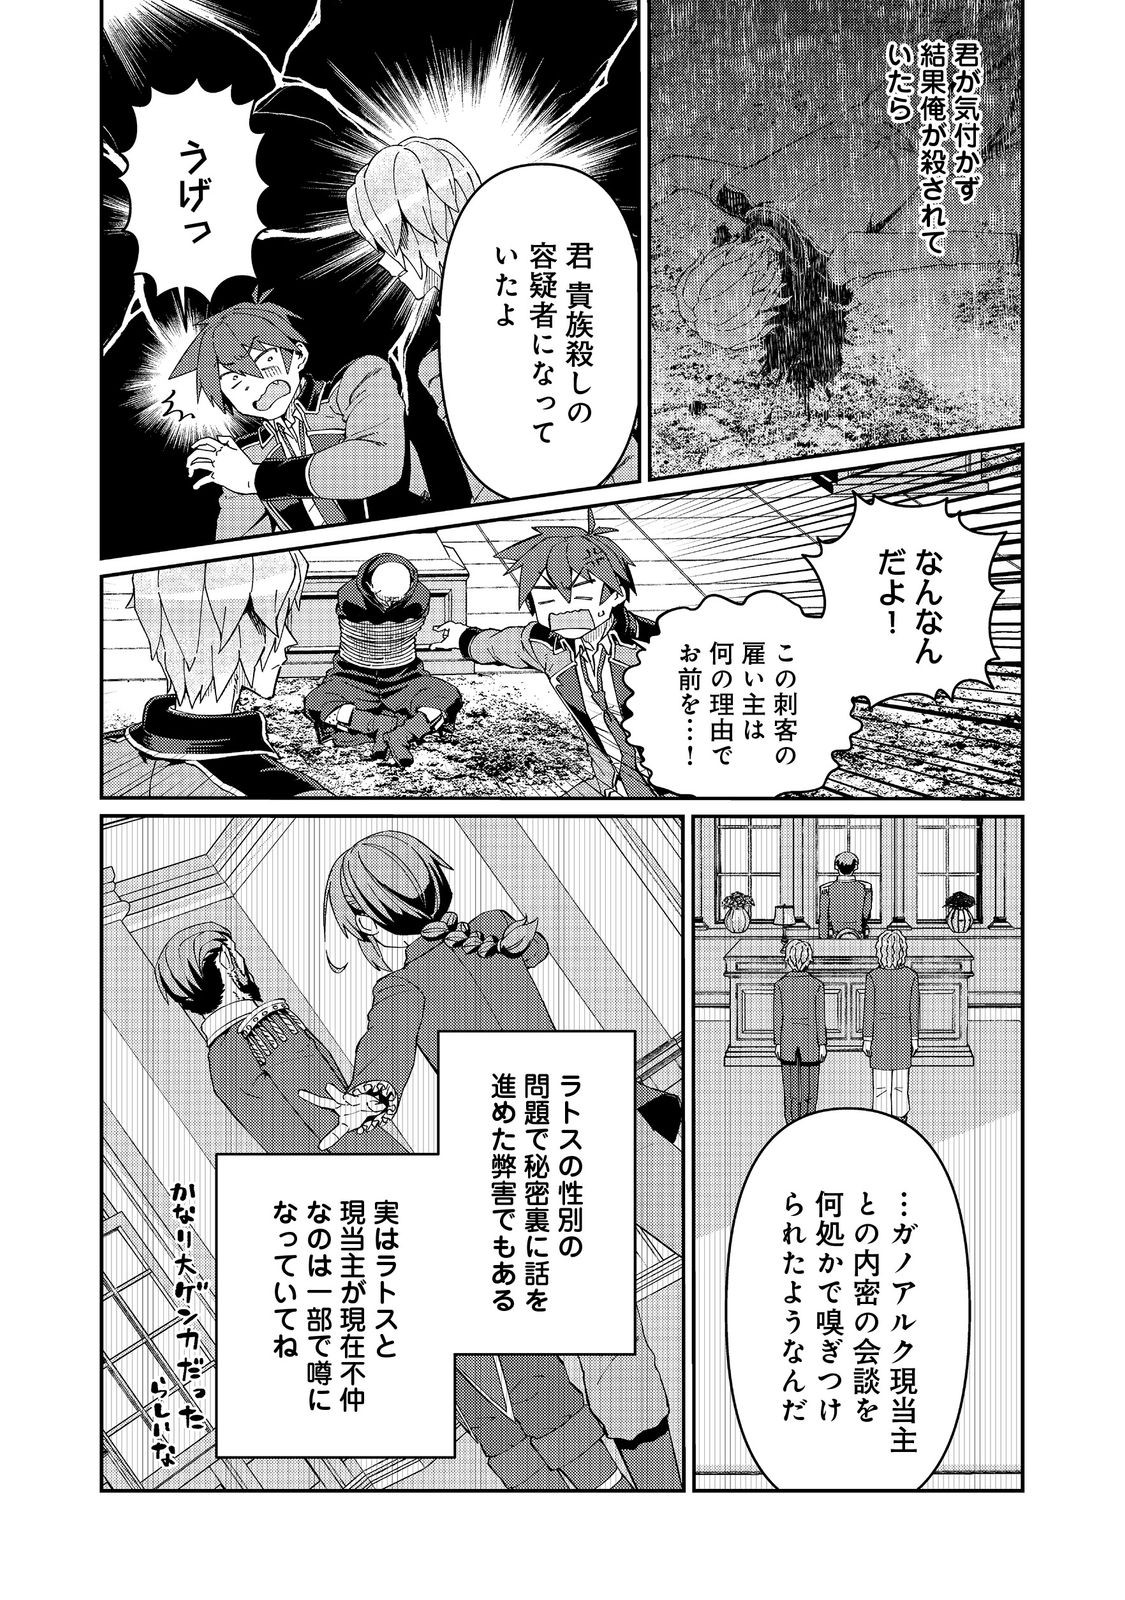 Daikenja no Manadeshi: Bougyo Mahou no Susume - Chapter 26.1 - Page 4